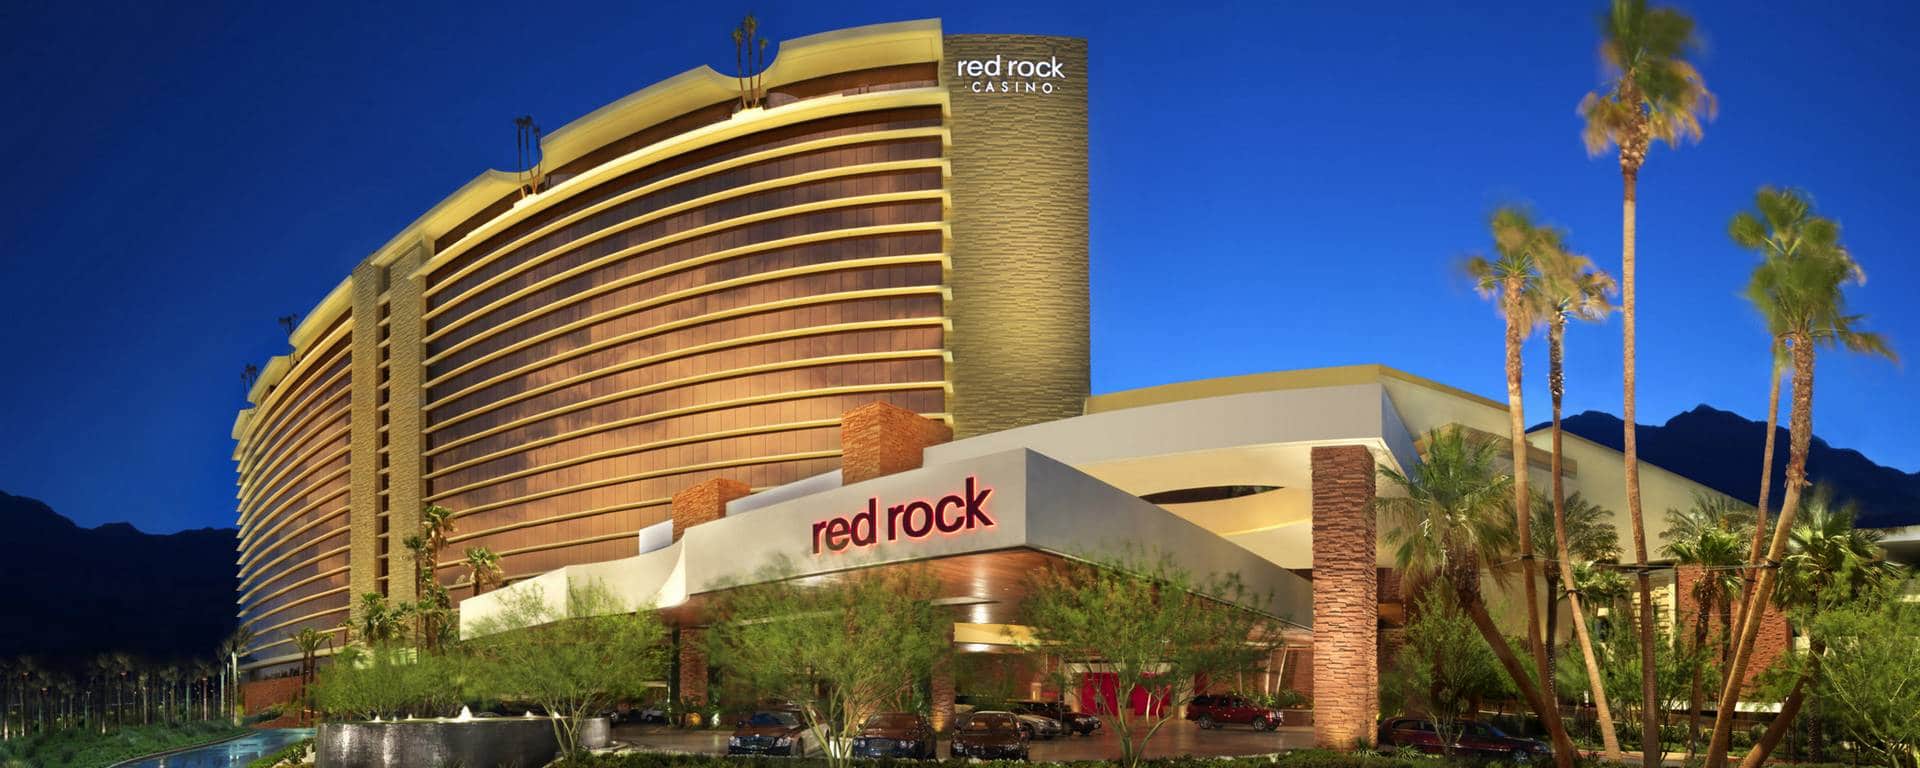 red rock casino vegas reviews